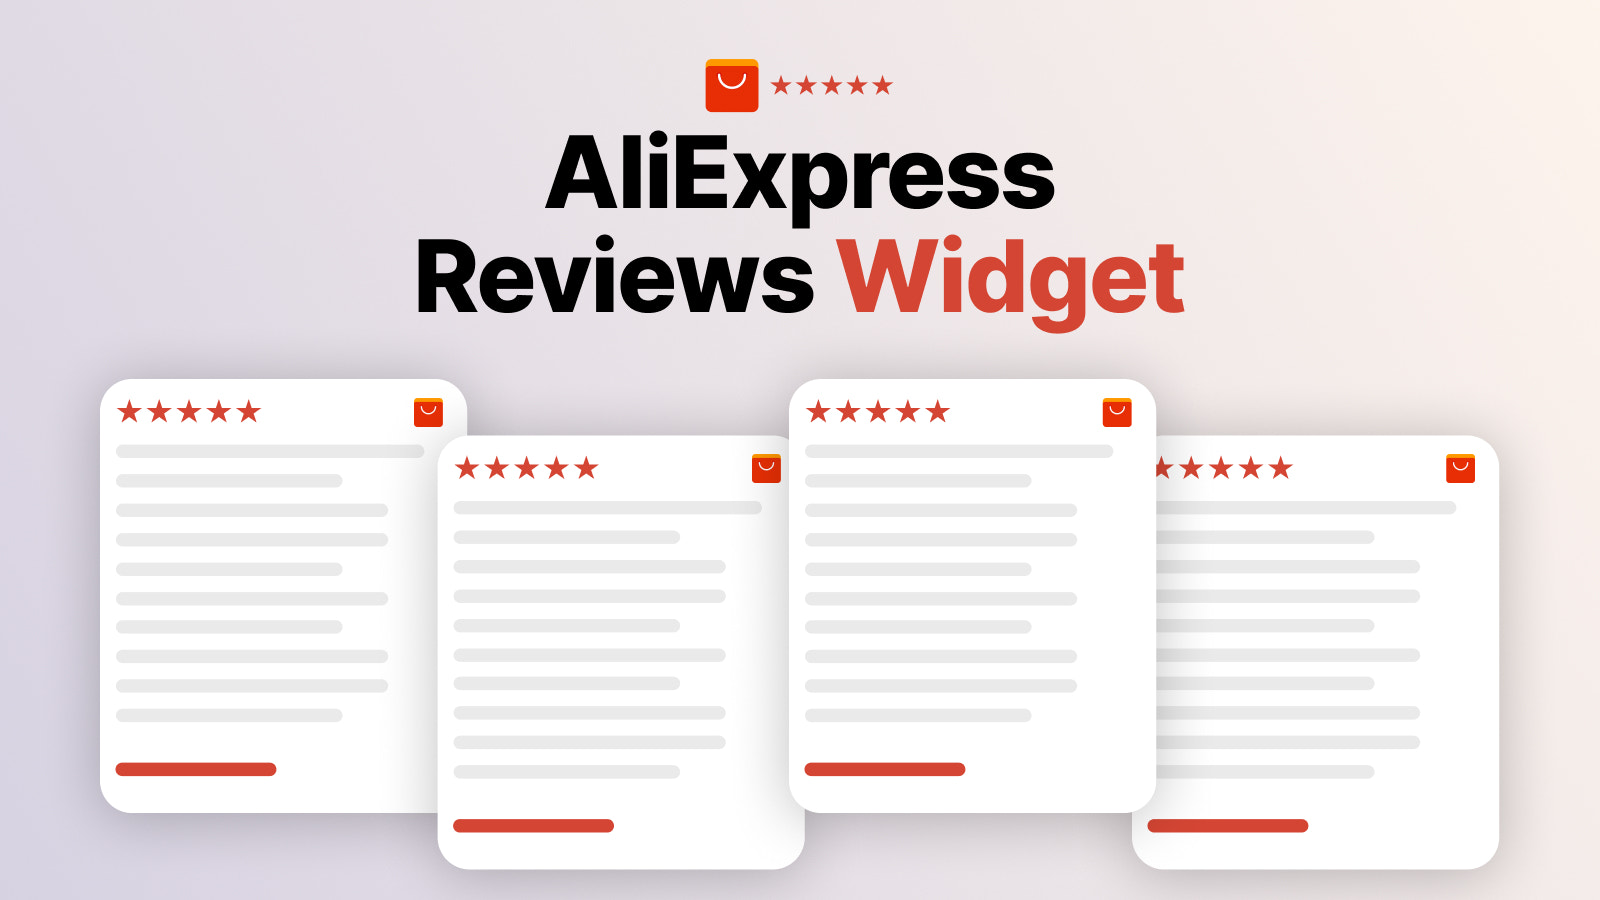 Widget de reseñas de Aliexpress